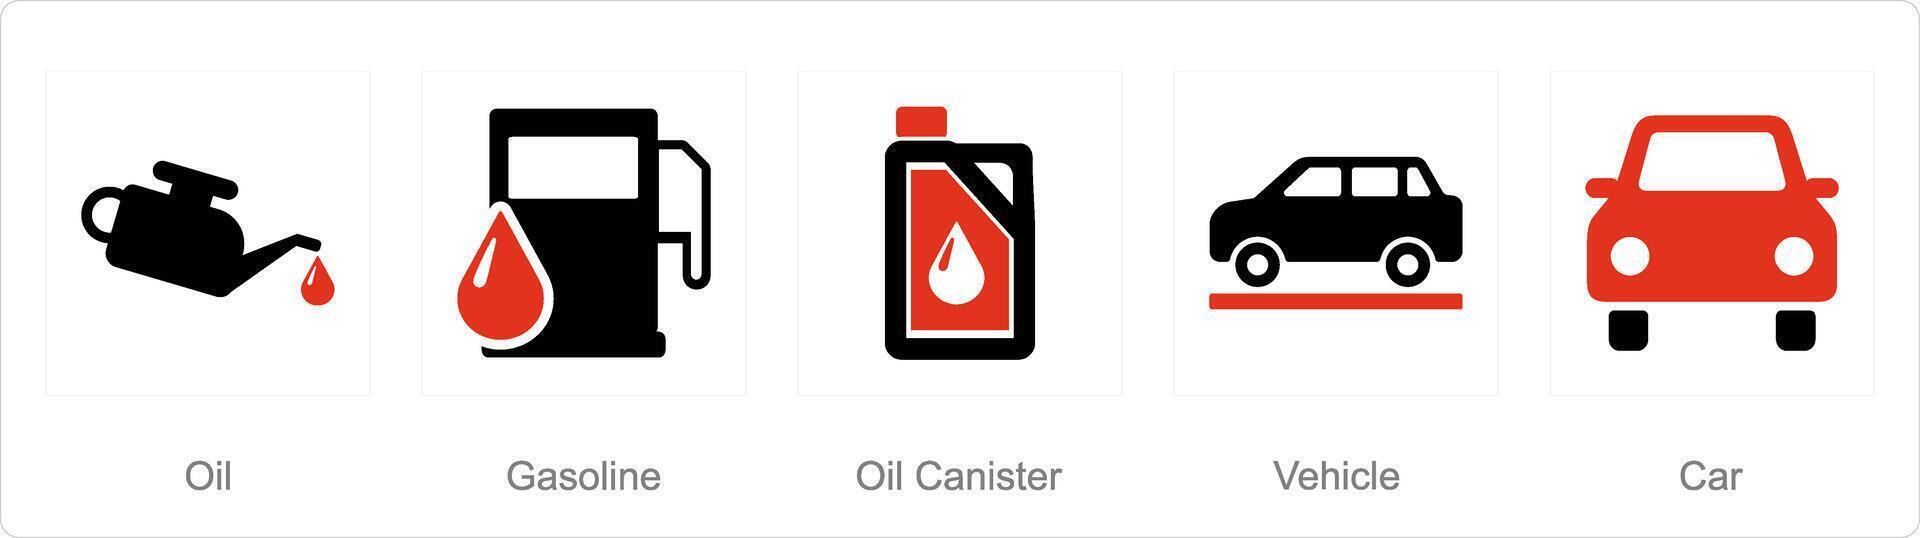 un conjunto de 5 5 coche íconos como aceite, gasolina, petróleo frasco vector